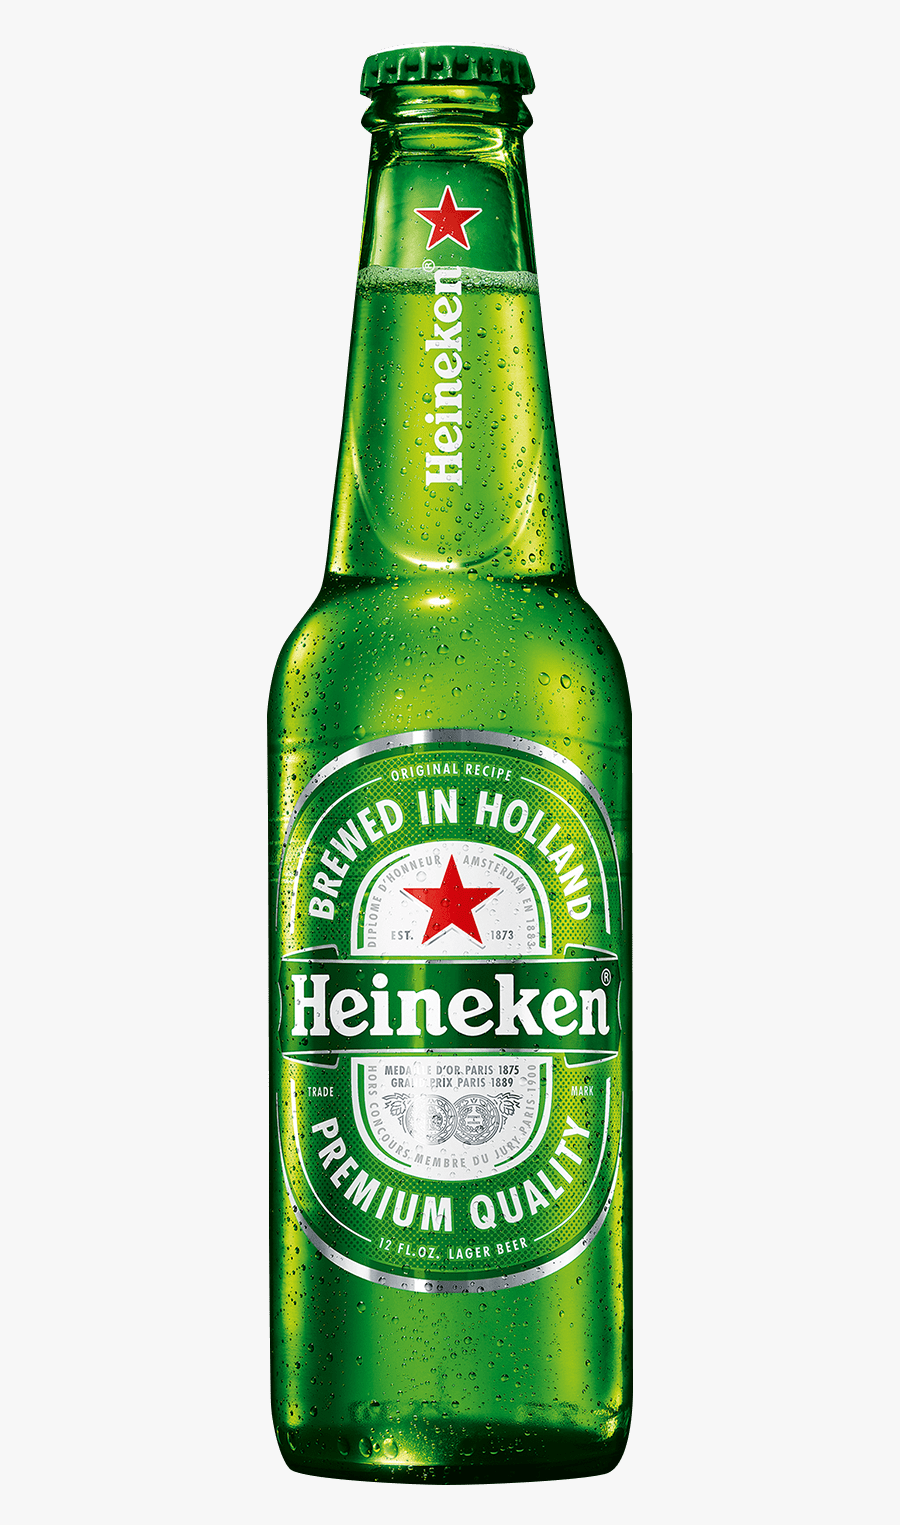 Transparent Images Pluspng Pngpluspngcom - Heineken Bottle Transparent, Transparent Clipart